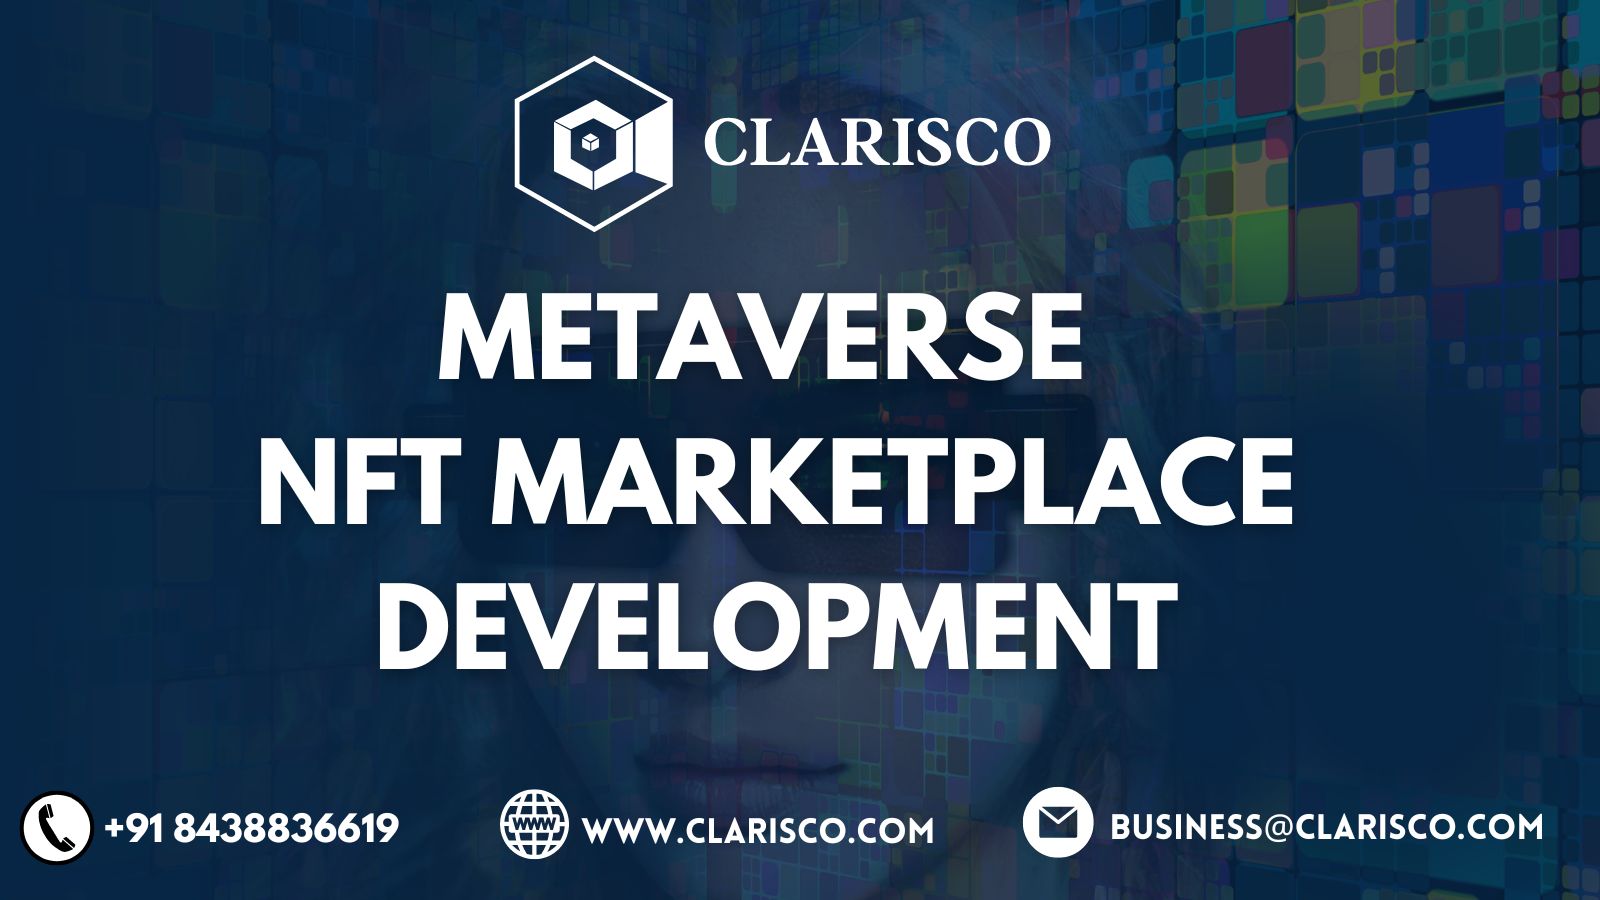 Metaverse NFT Marketplace Development Company | Clarisco